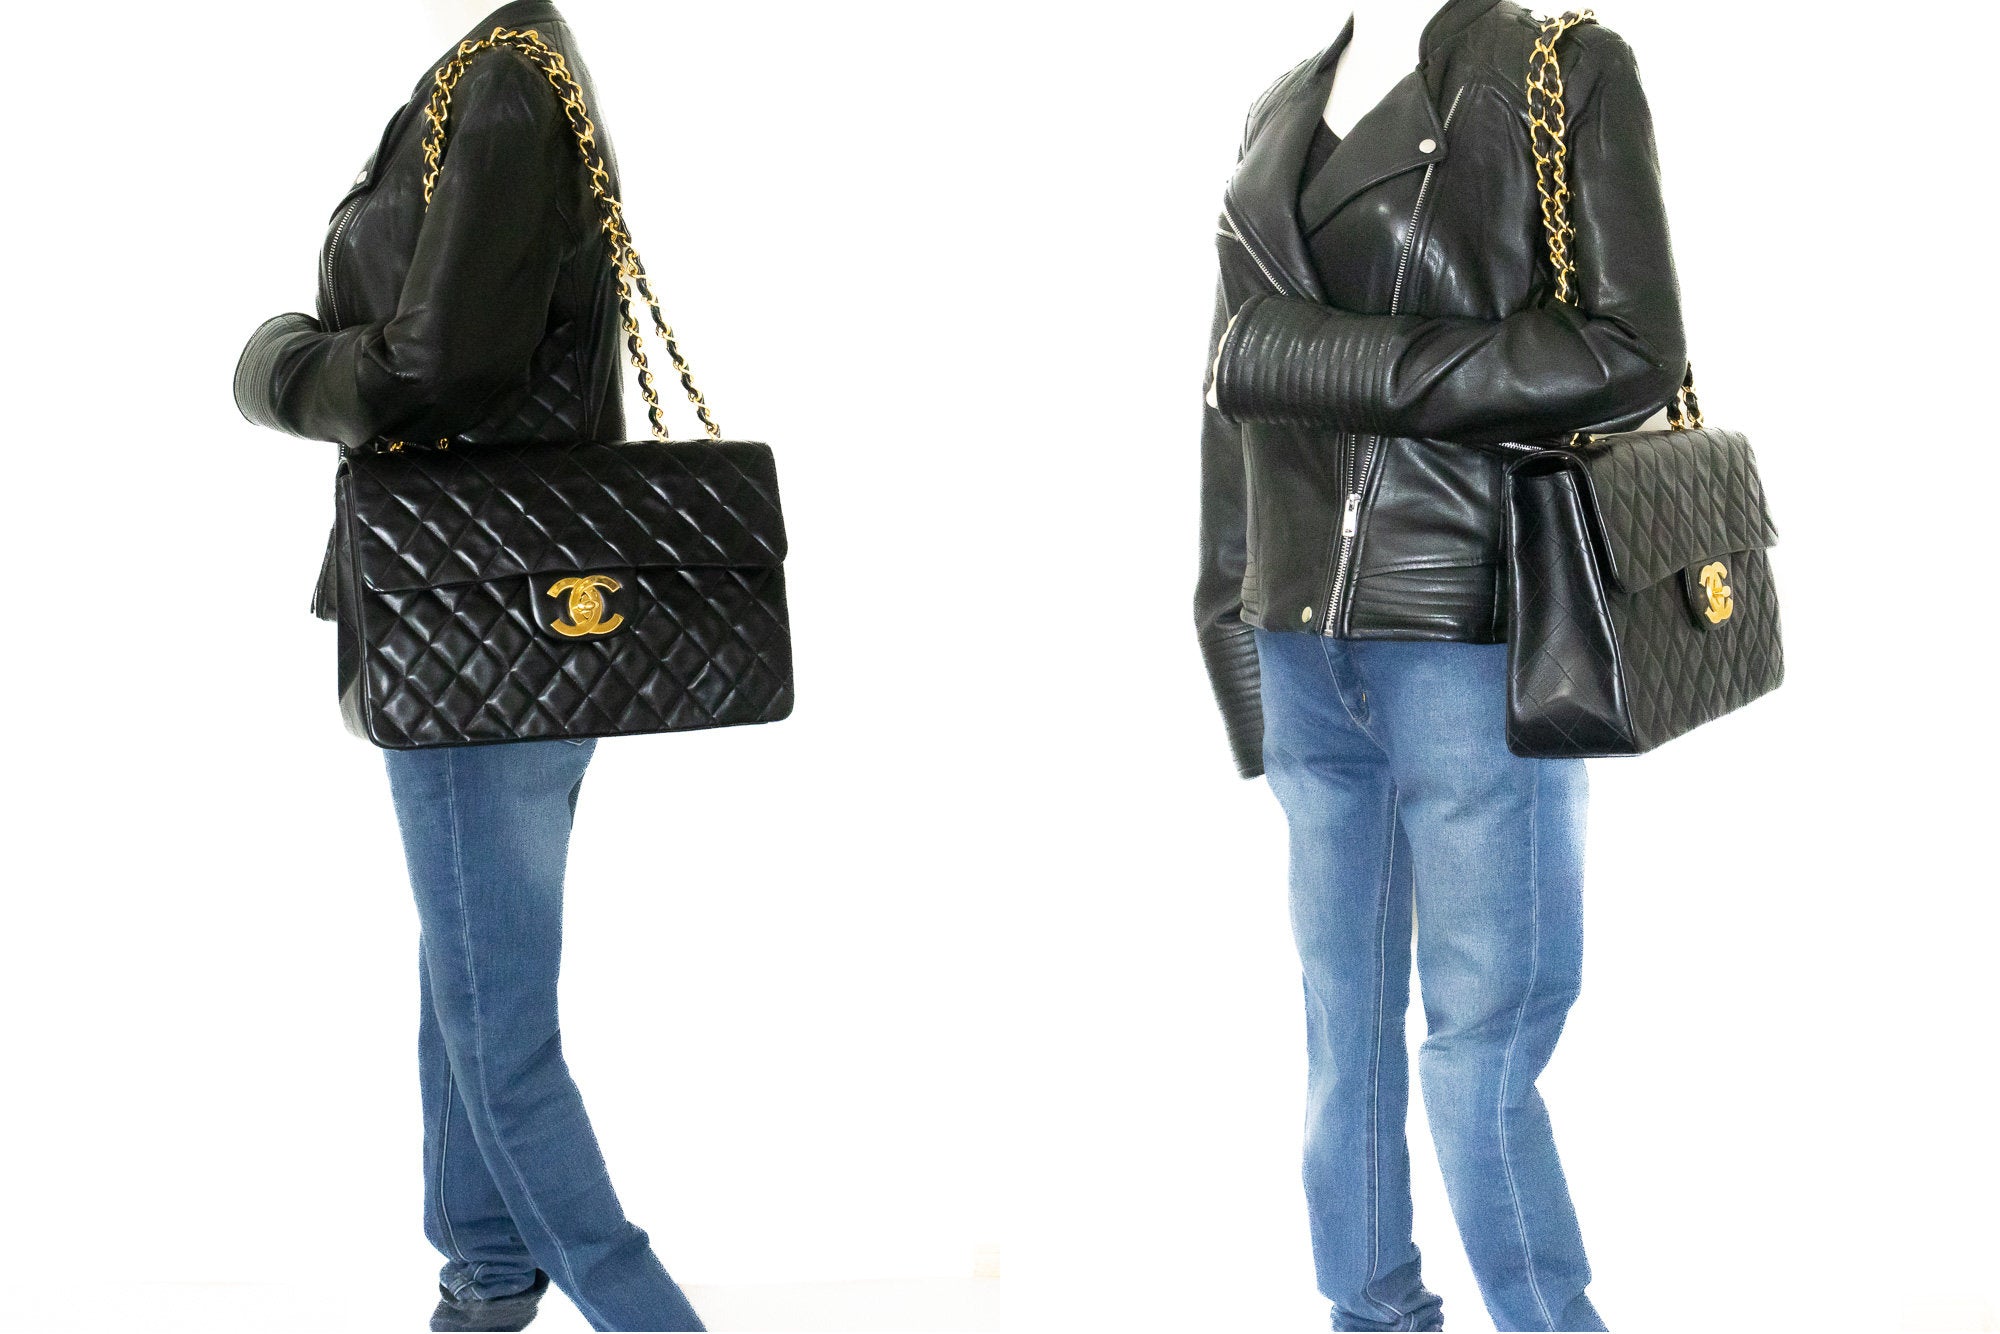 Chanel Vintage Black Lambskin XL Jumbo Flap Bag Chanel